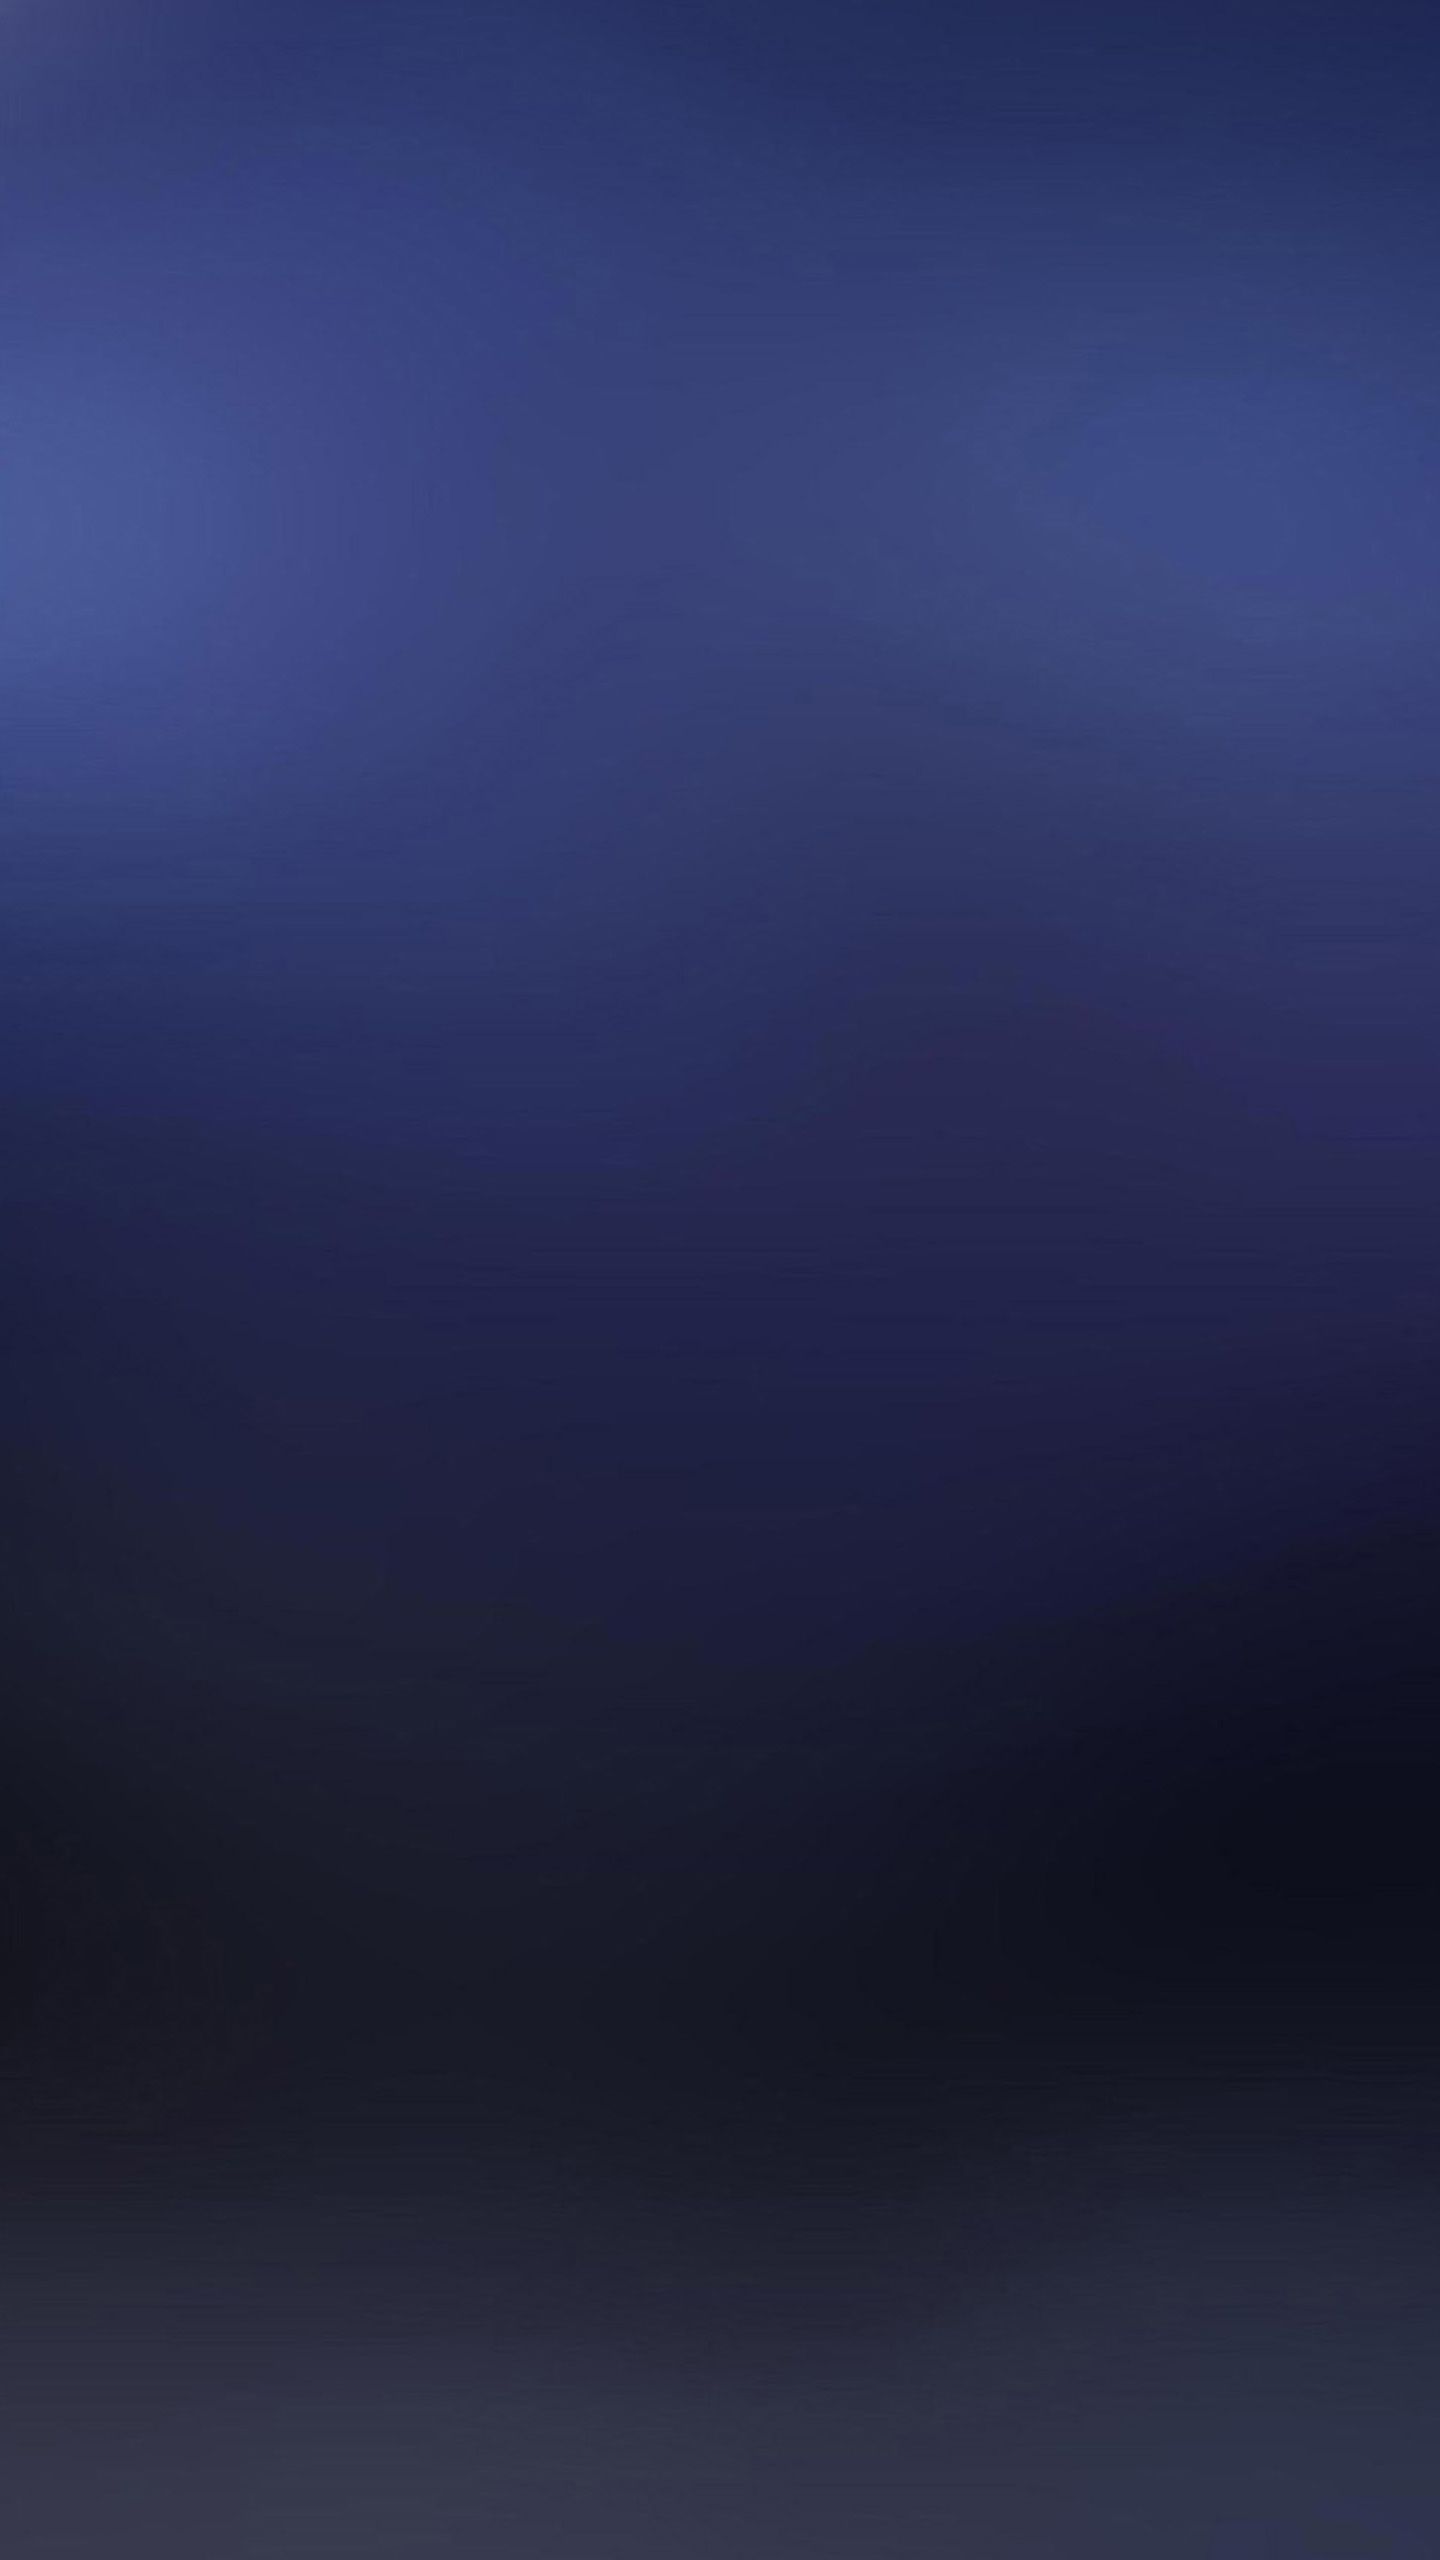 Simple Mirror Galaxy S6 Wallpaper Blue In